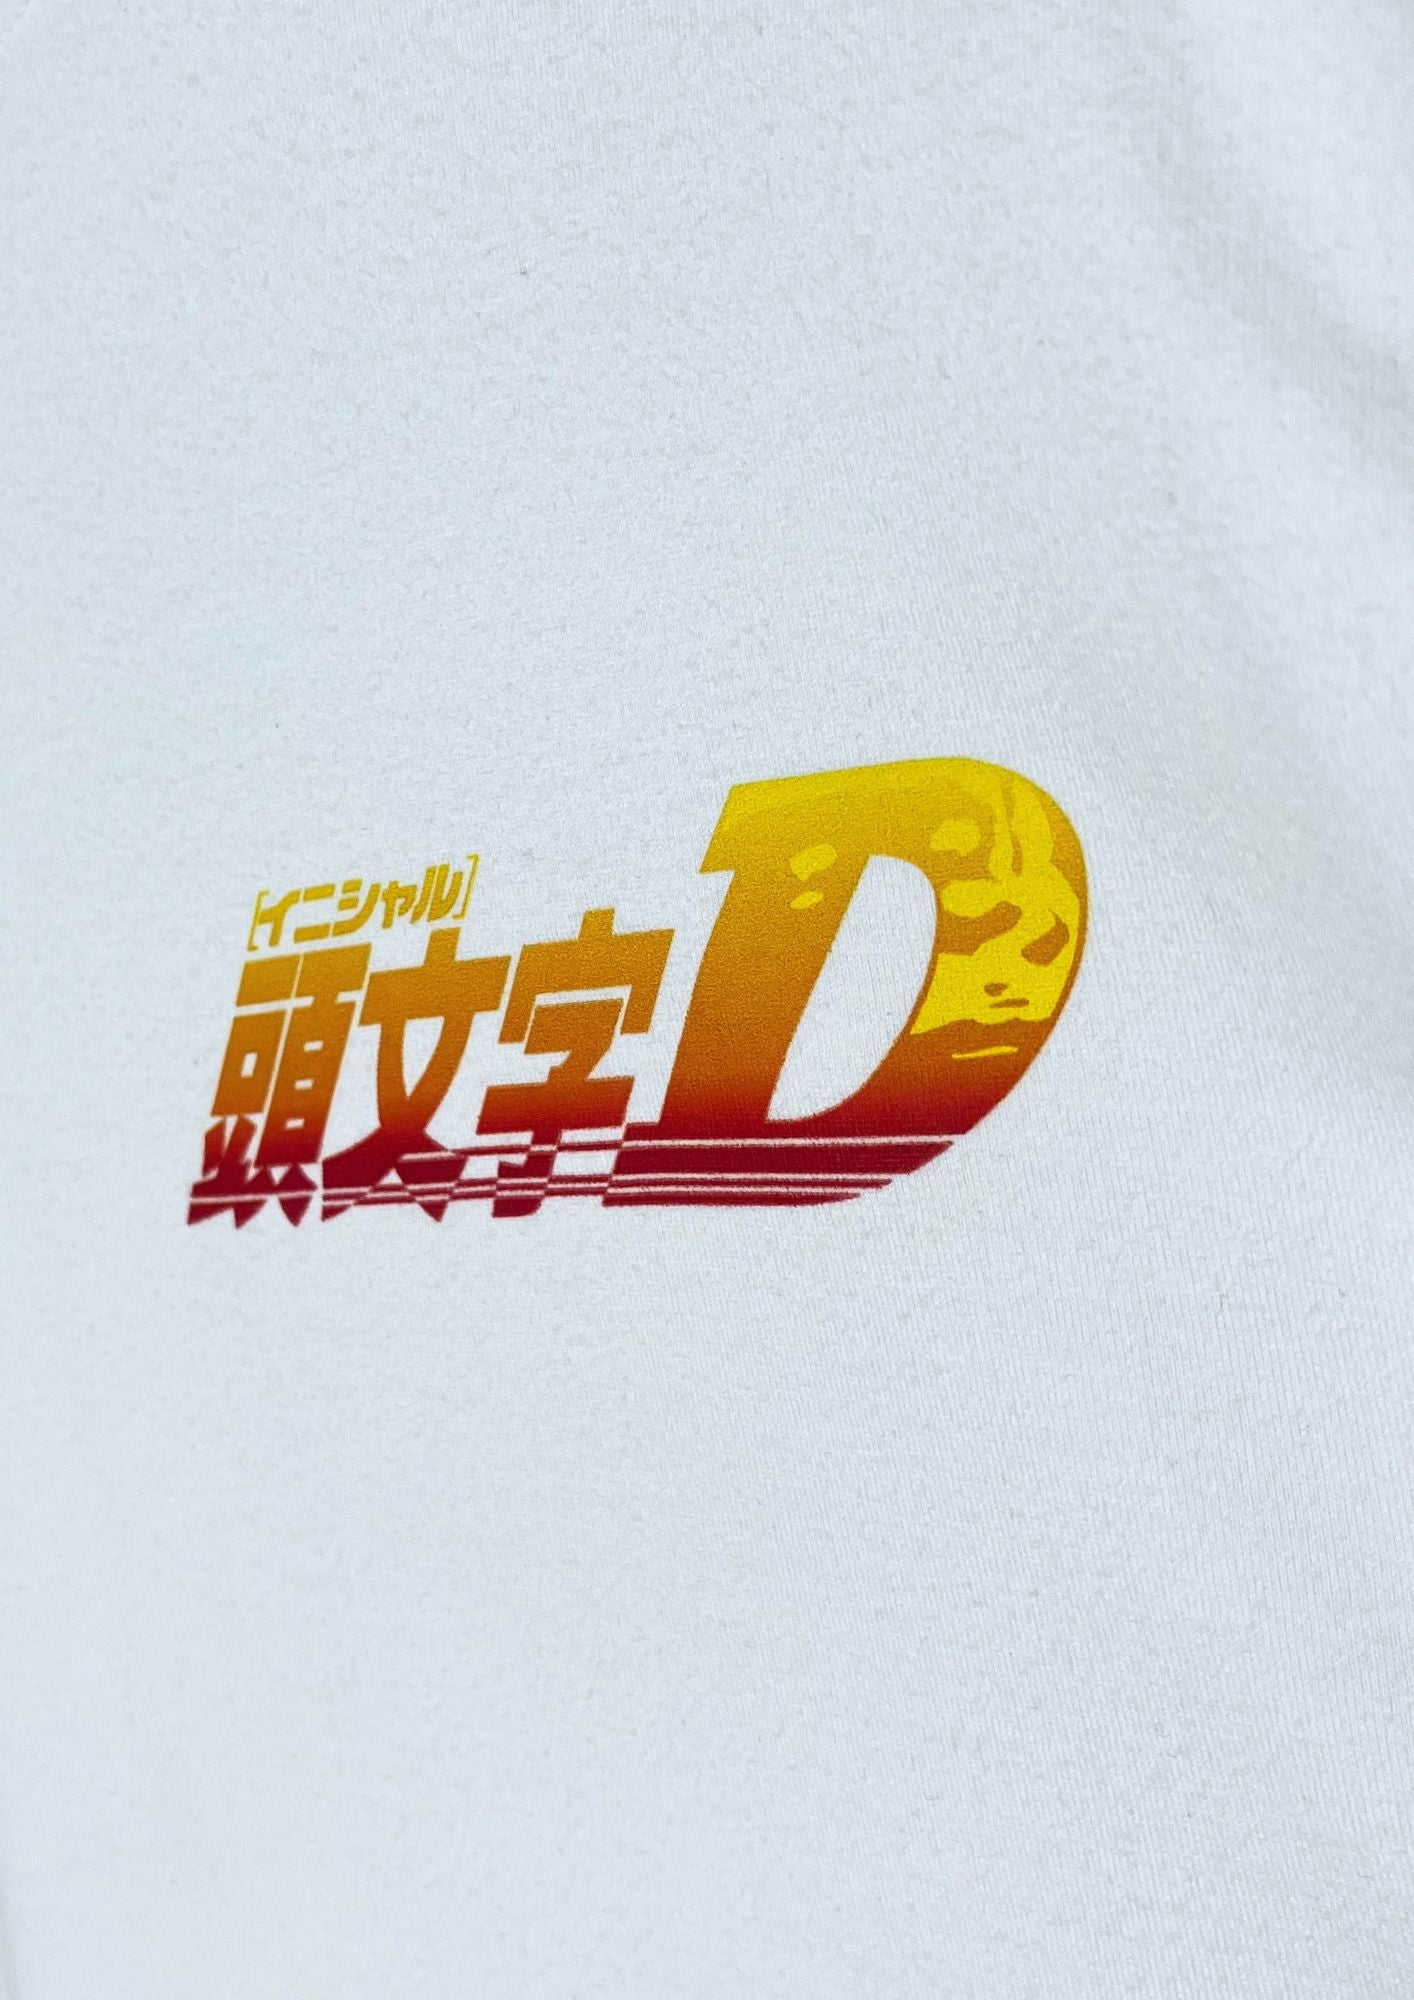 Initial D x X-Large Keisuku Long Sleeve Shirts